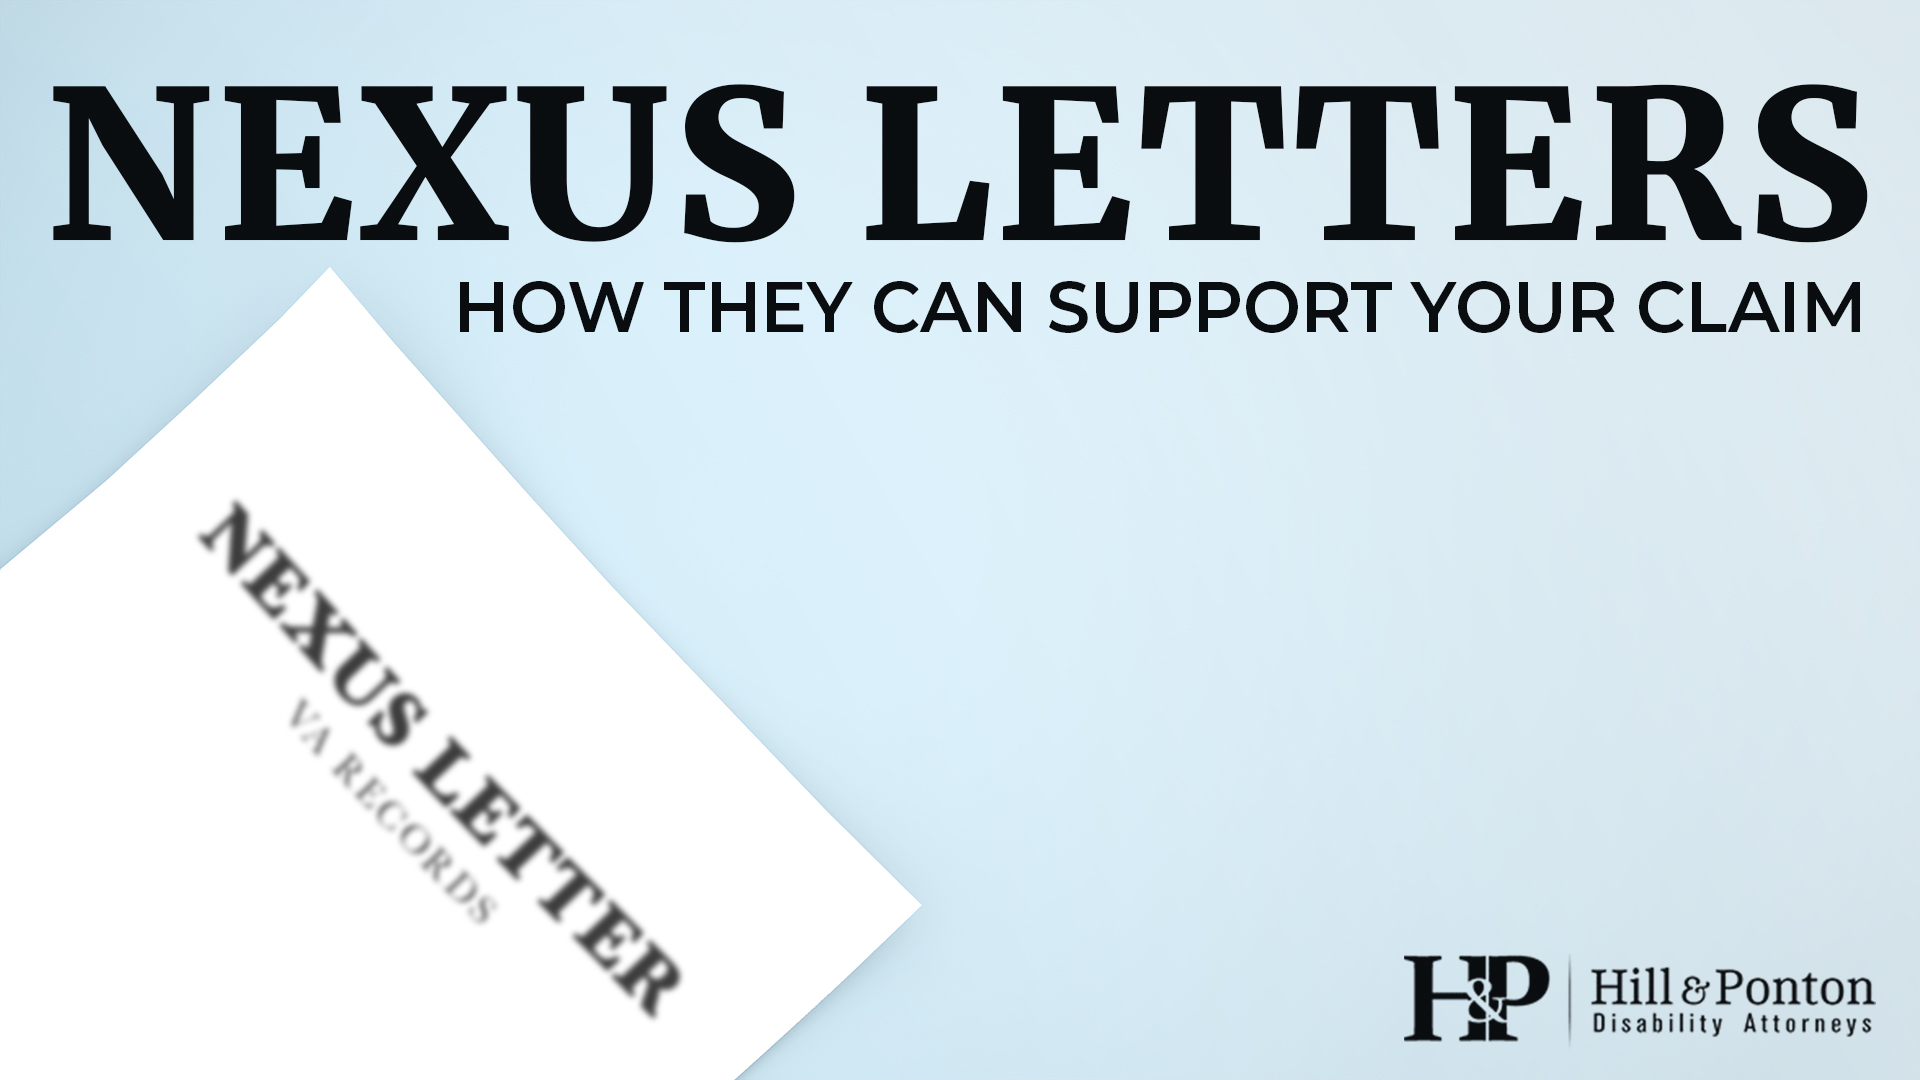 Nexus Letter